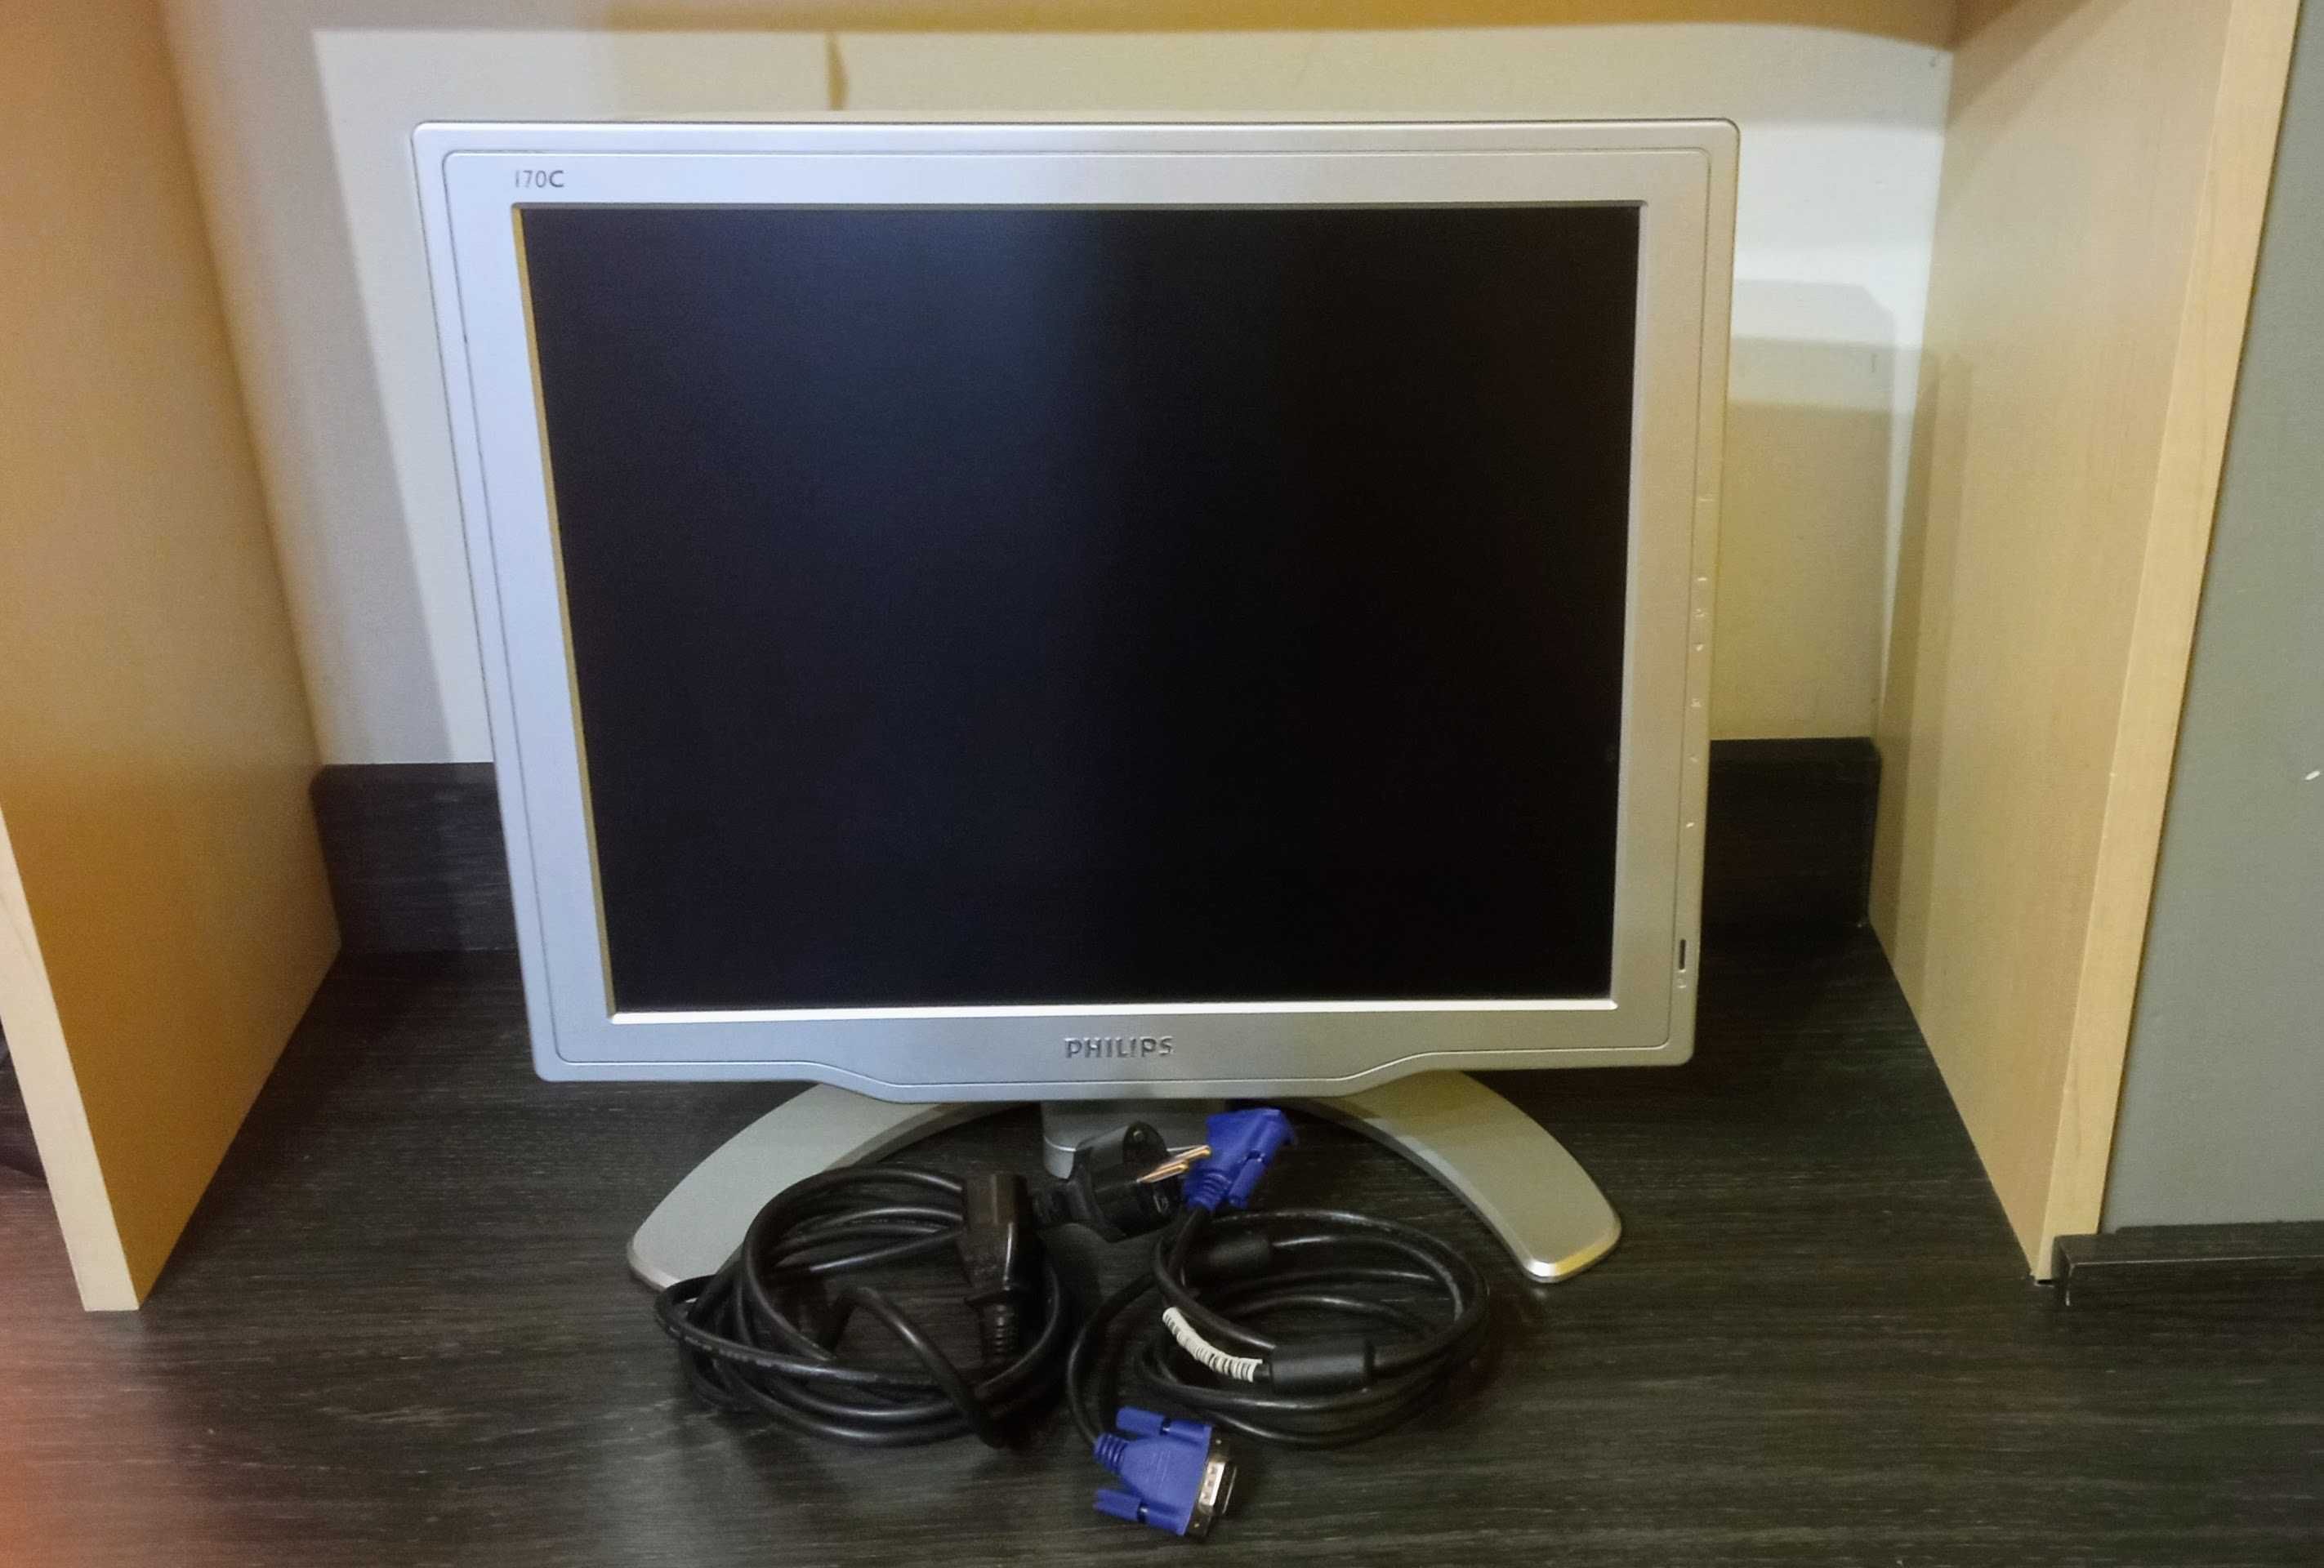 Monitor Komputerowy 17`` Philips 170C5 VGA Super stan - 100% Sprawny